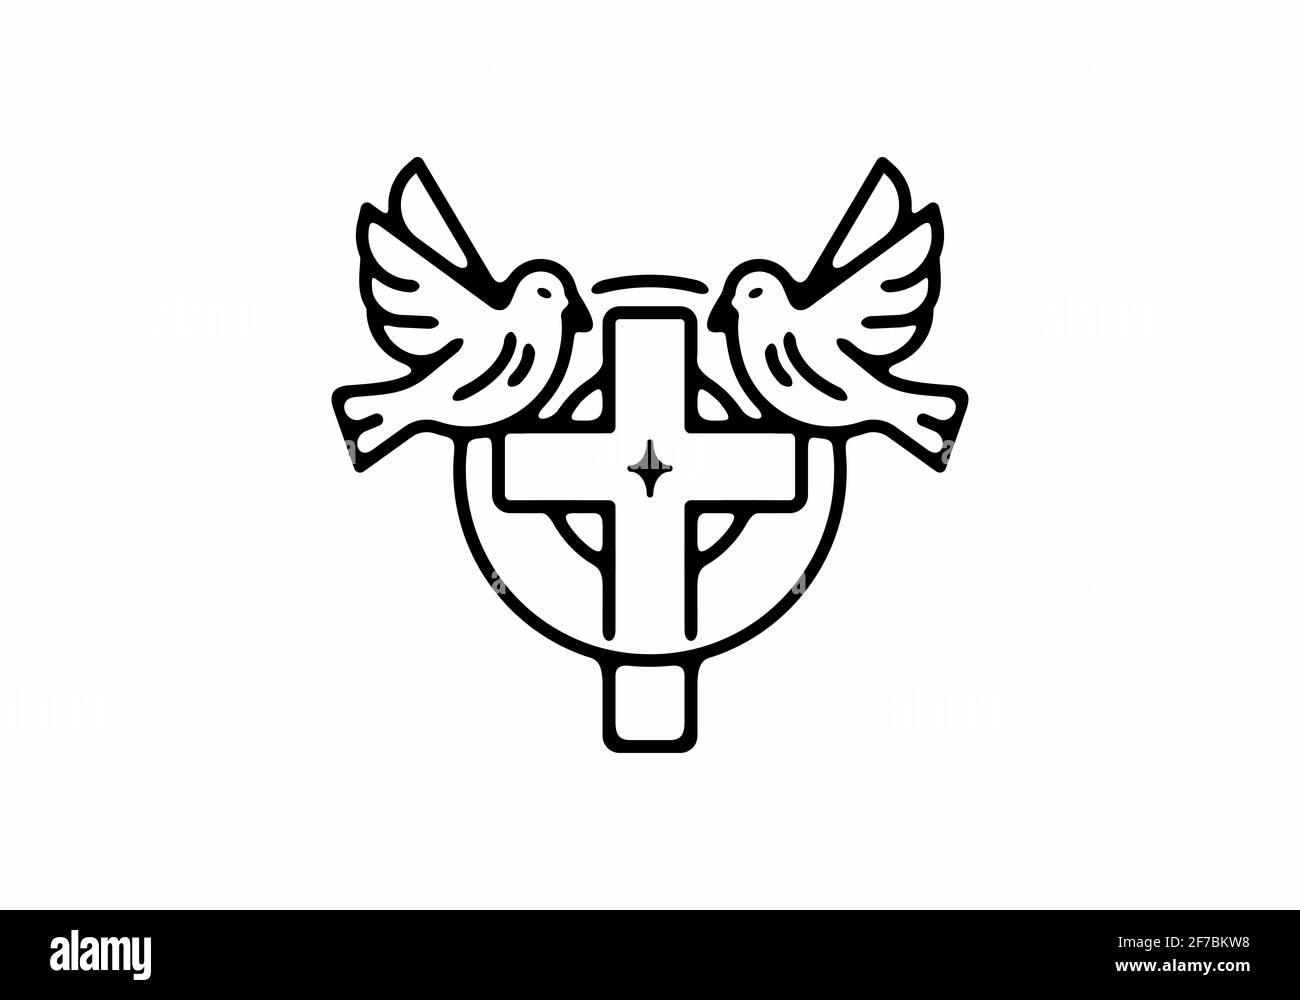 Cross and bird line art black and white tattoo design Stock Vector